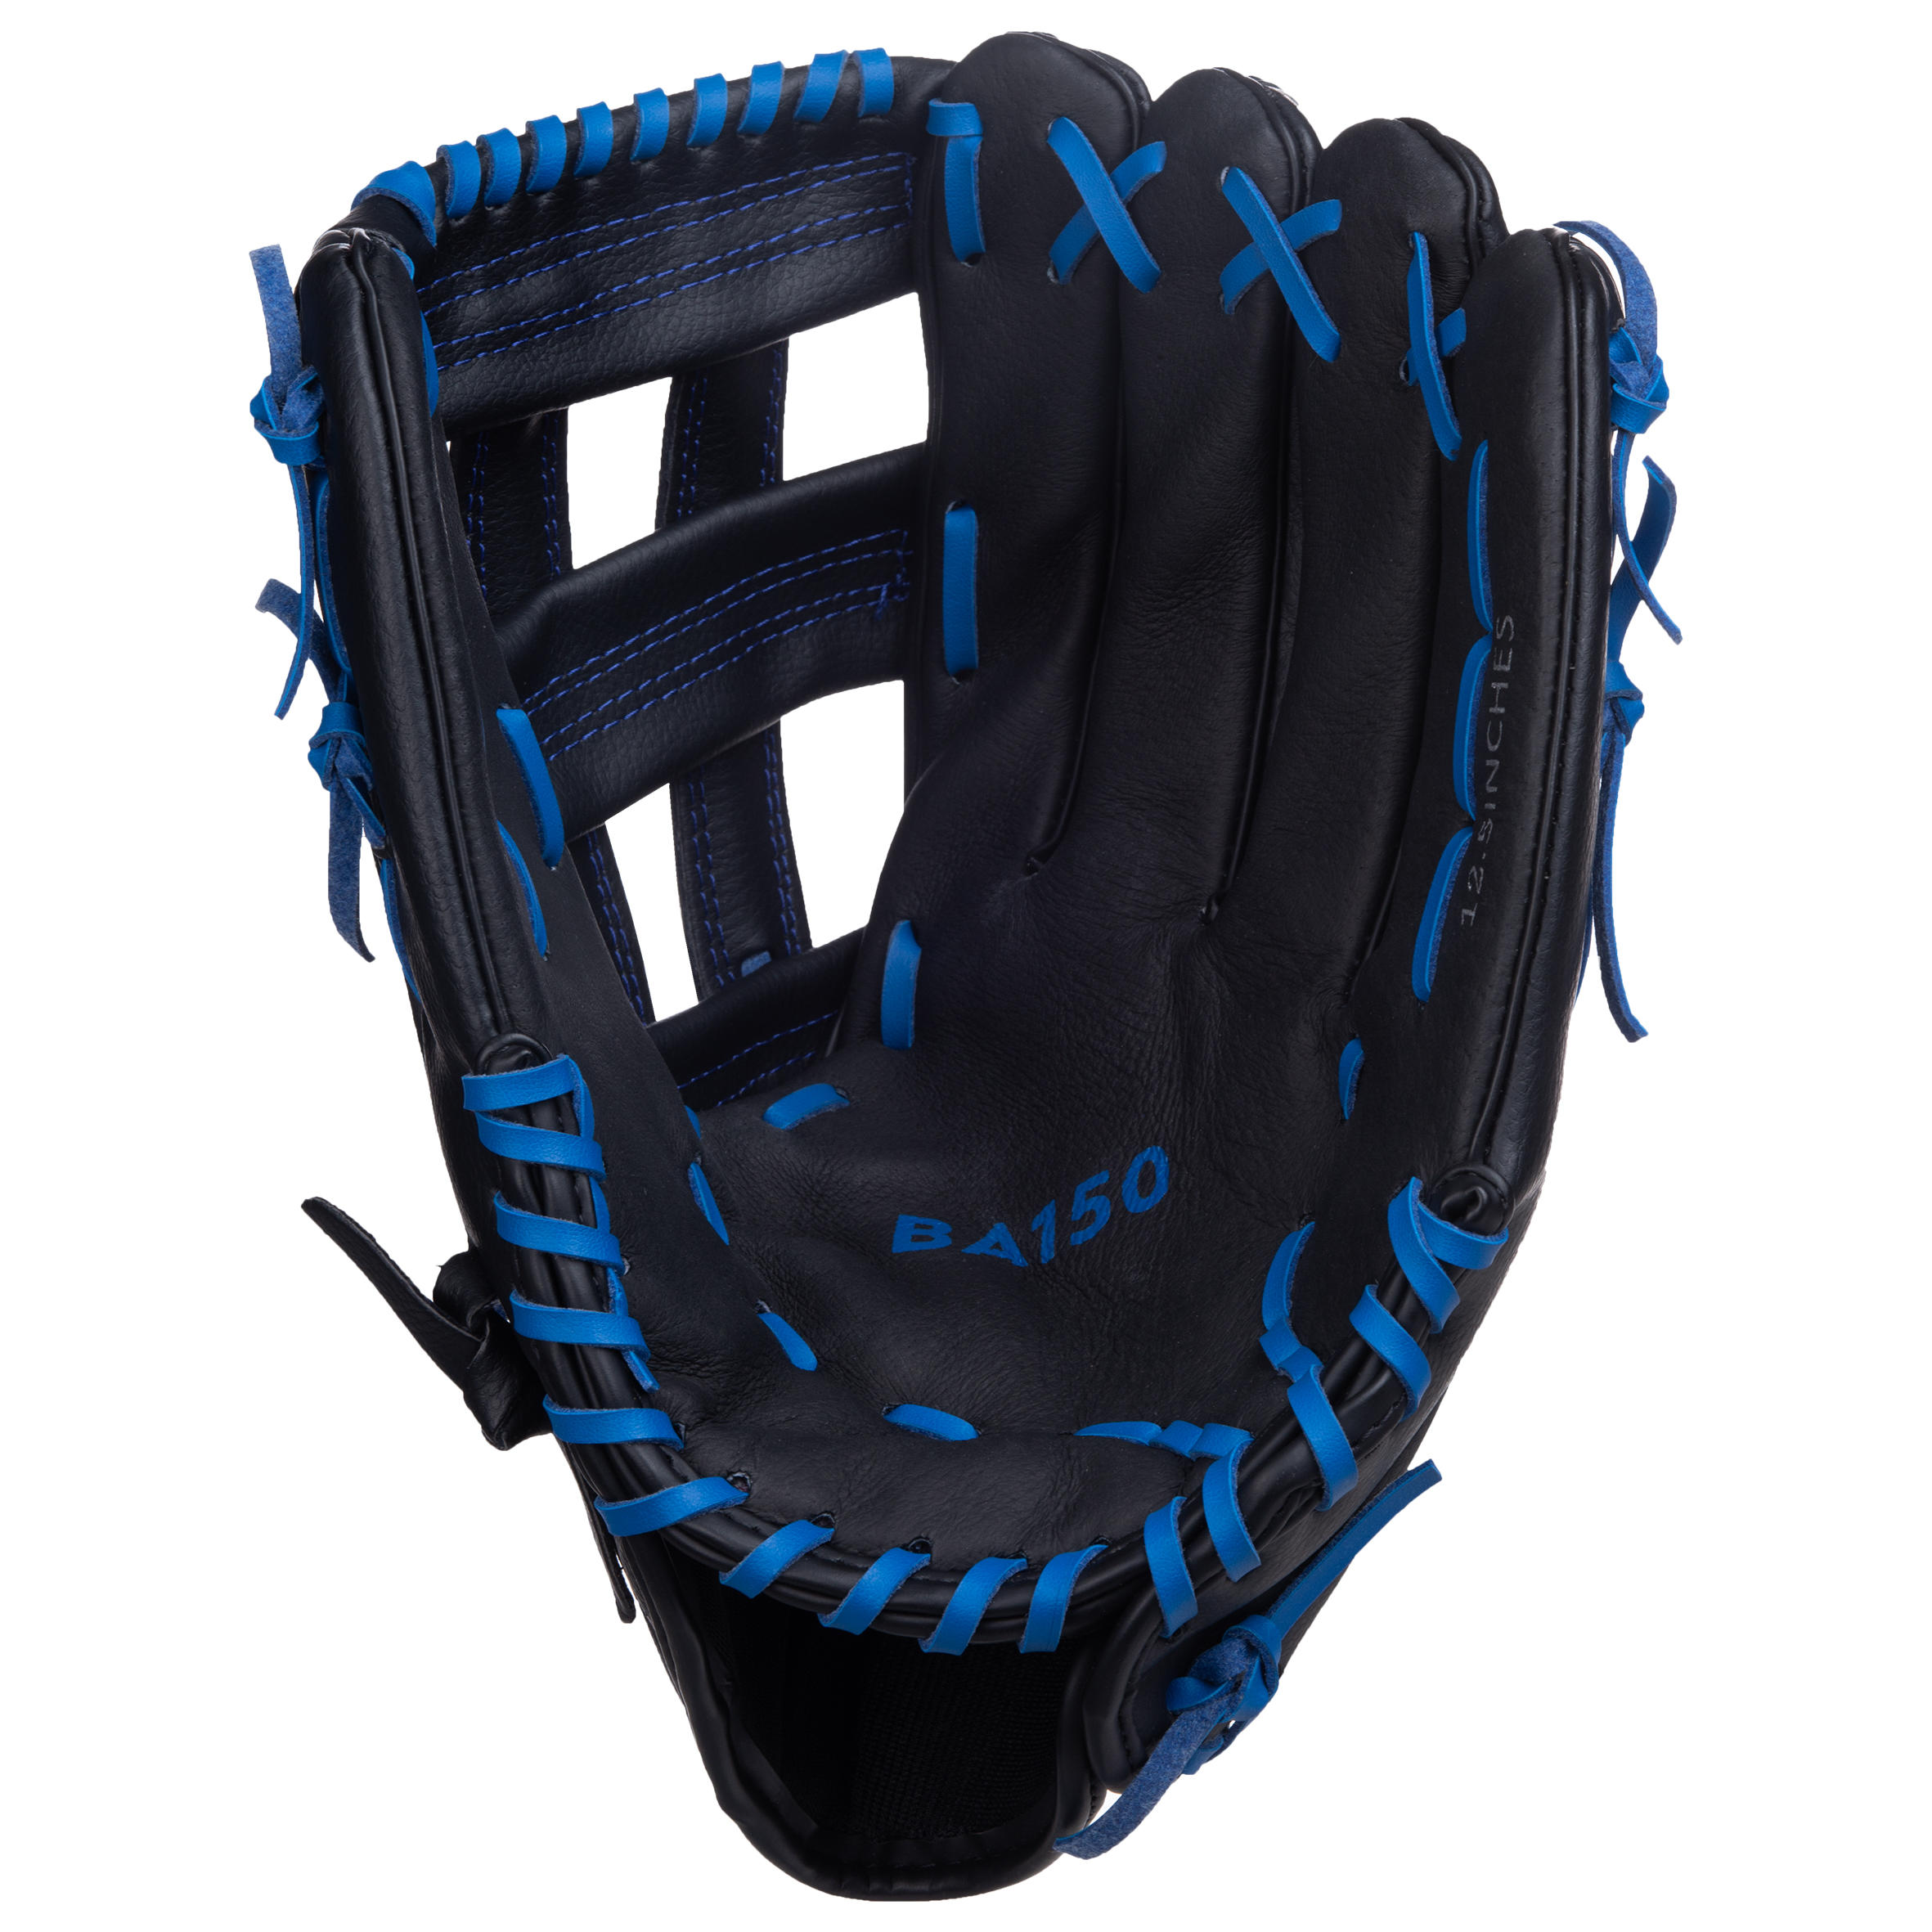 Left-Hand Baseball Glove - BA 150 Black/Blue - KIPSTA